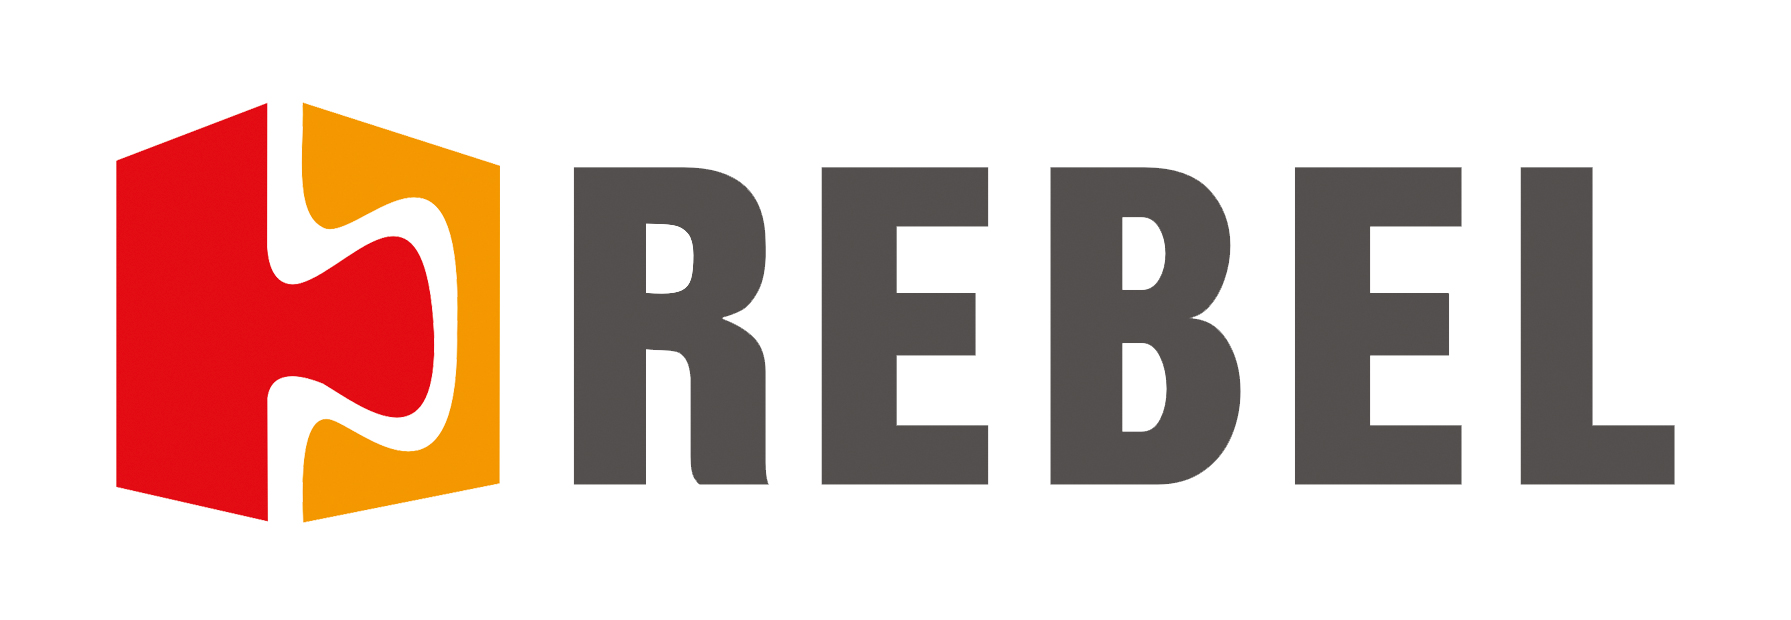 rebel logo wydawnictwo grey